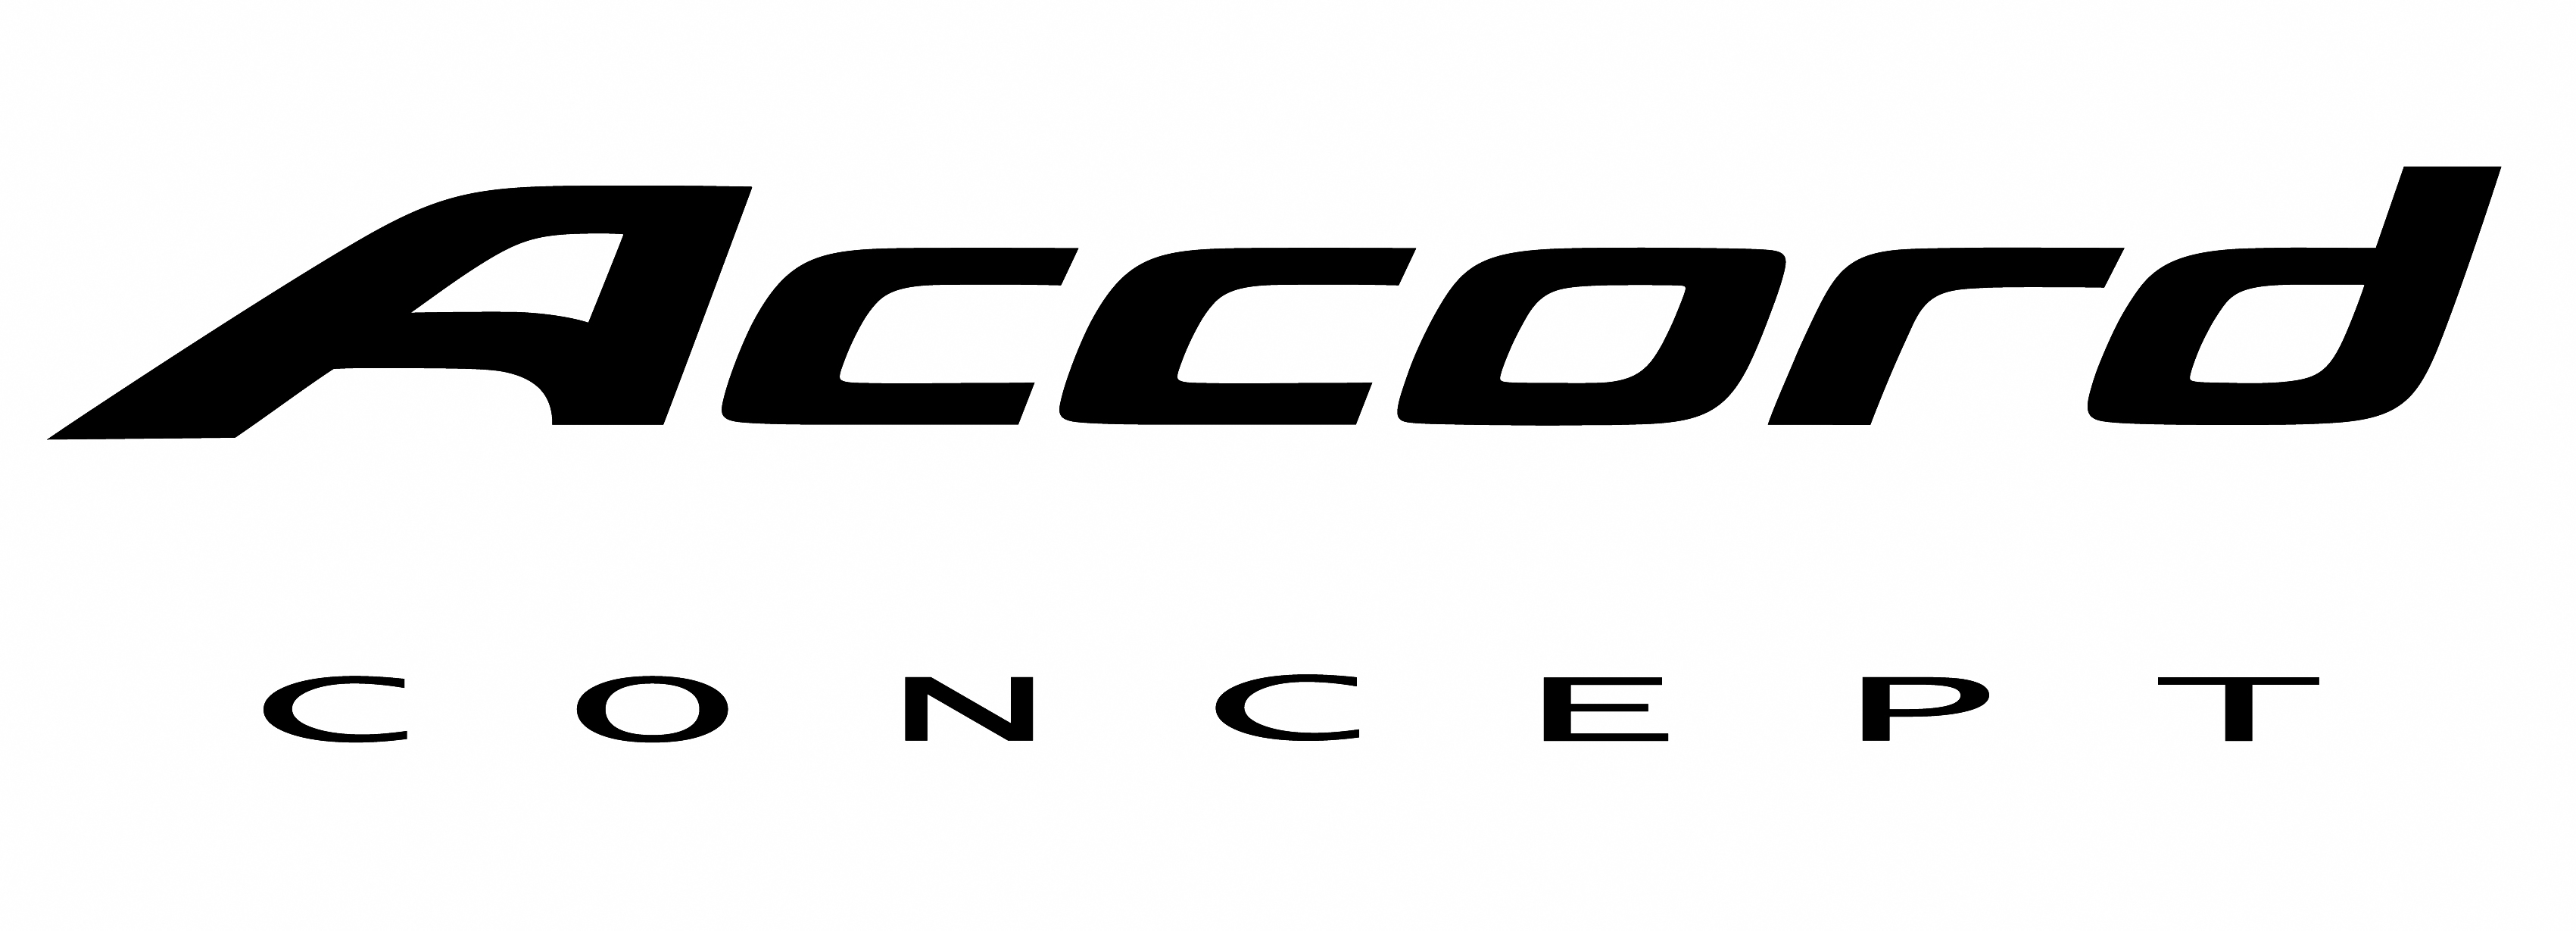 Honda Accord Logos